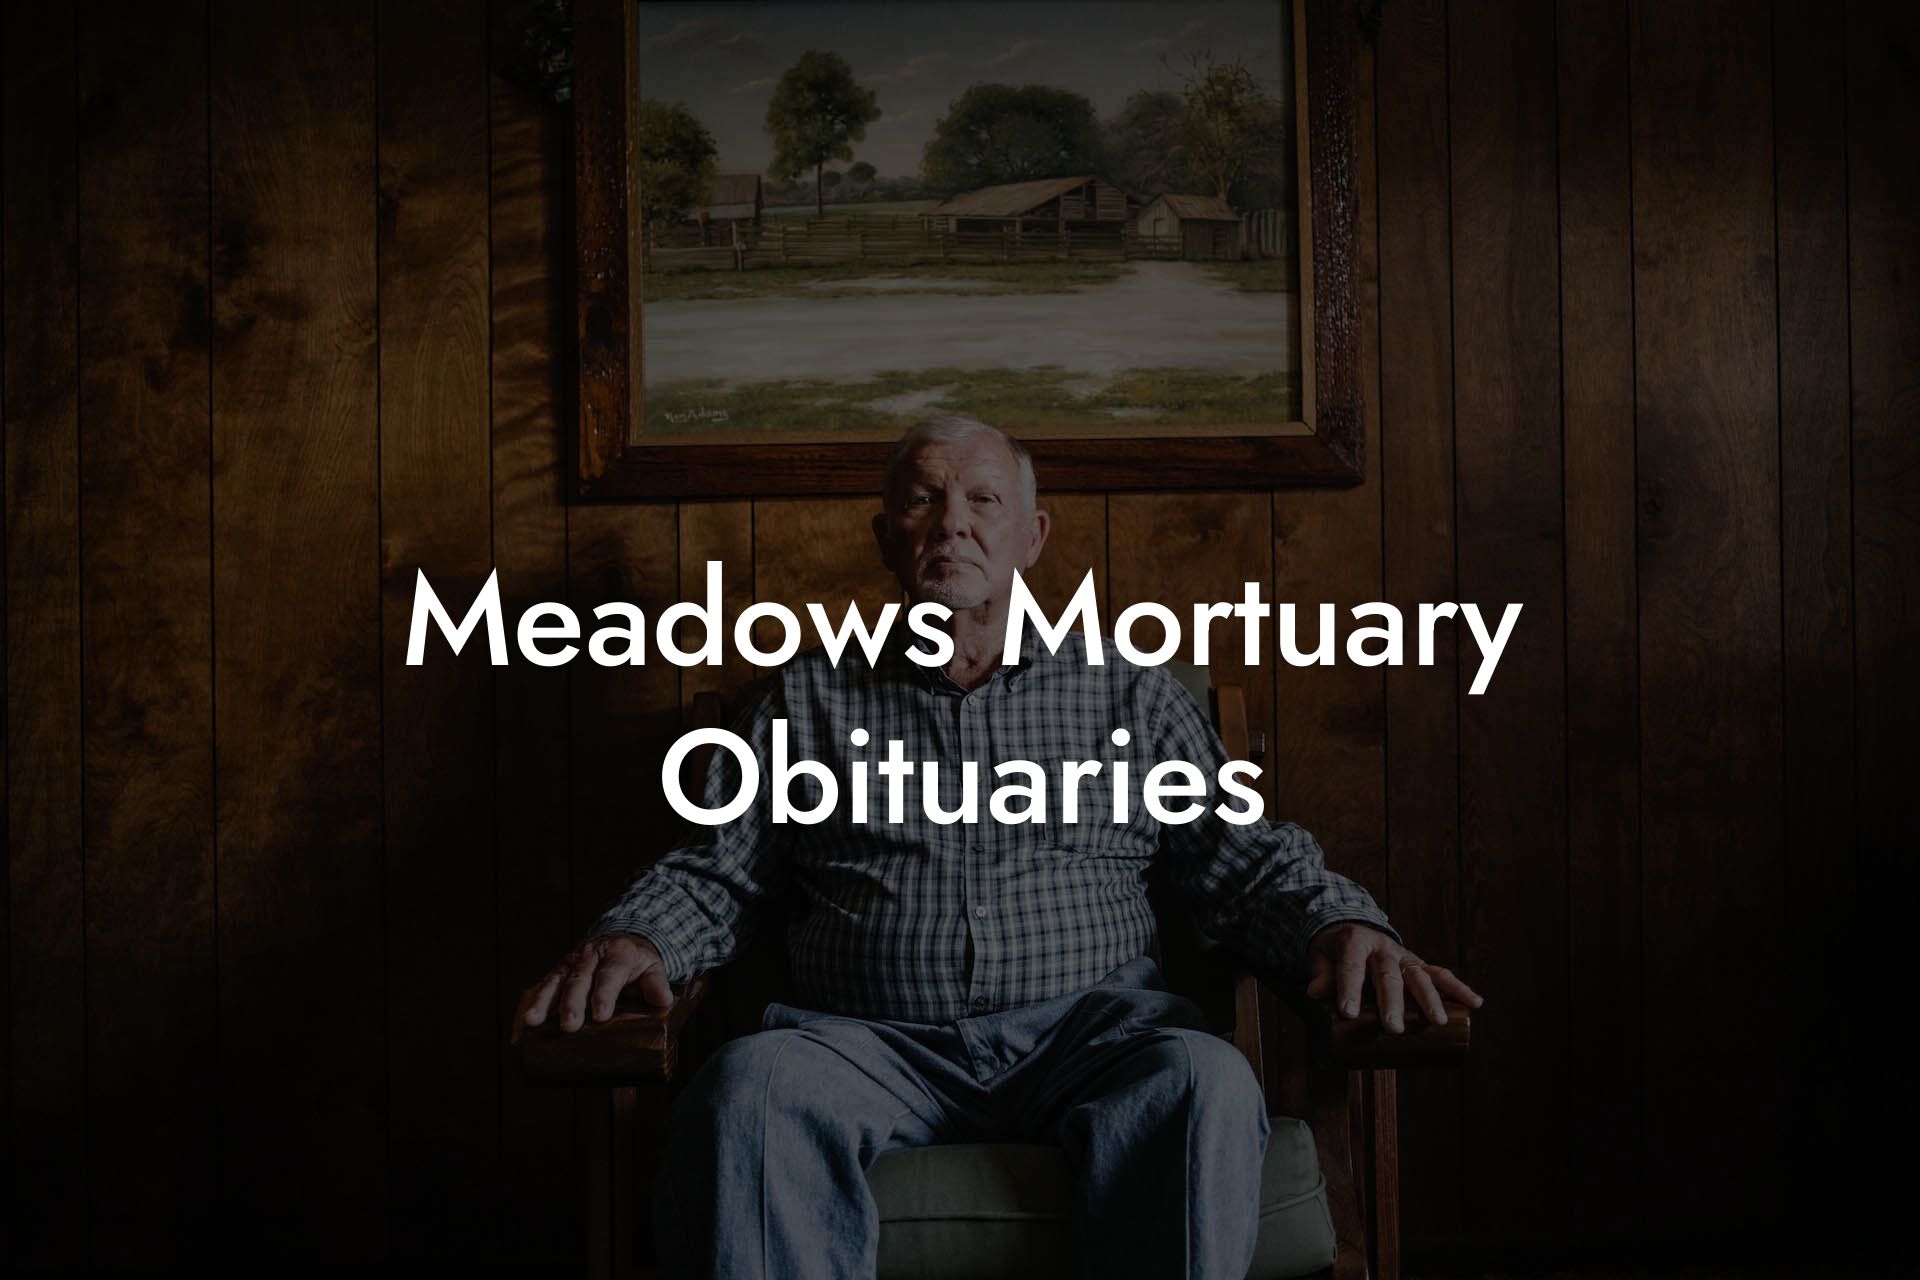 Meadows Mortuary Obituaries